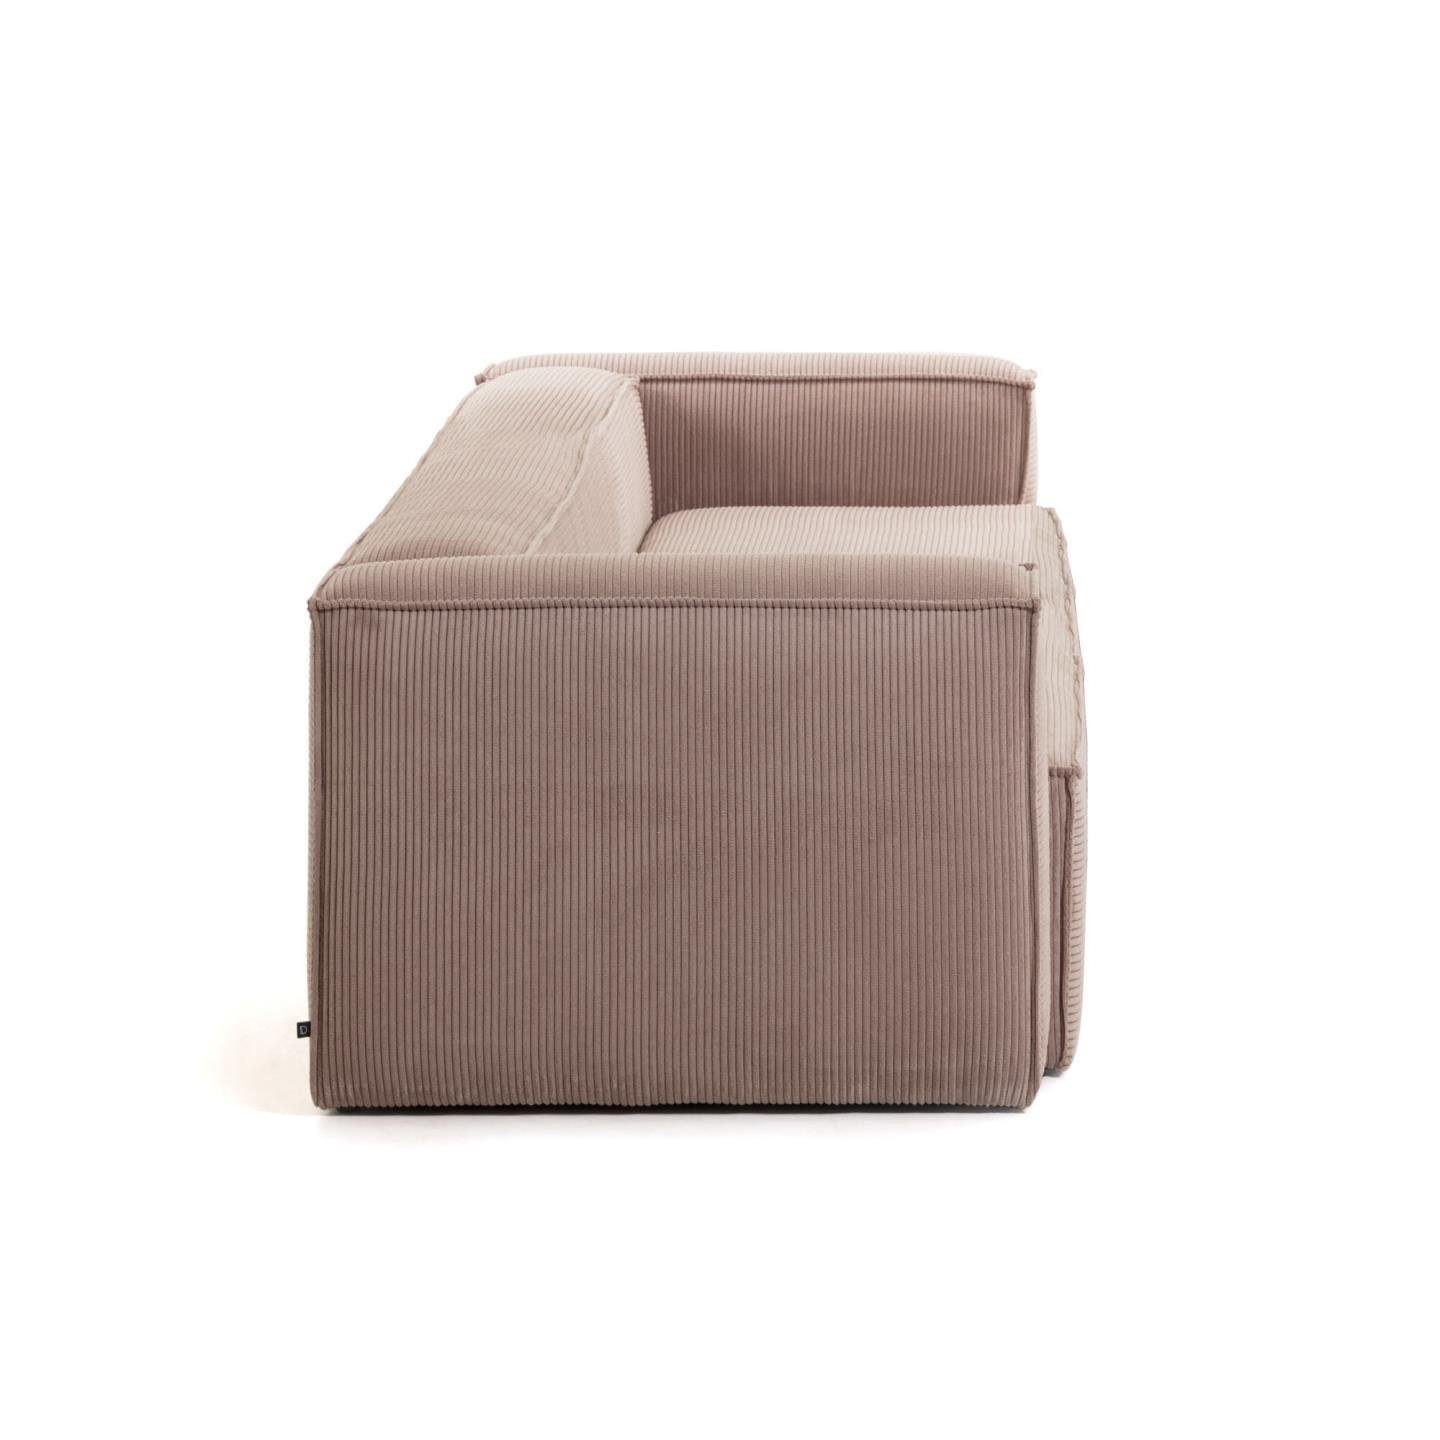 2-Sitzer 210cm rosa Couch Blok Sitzgelegenheit Natur24 Sofa Sofa